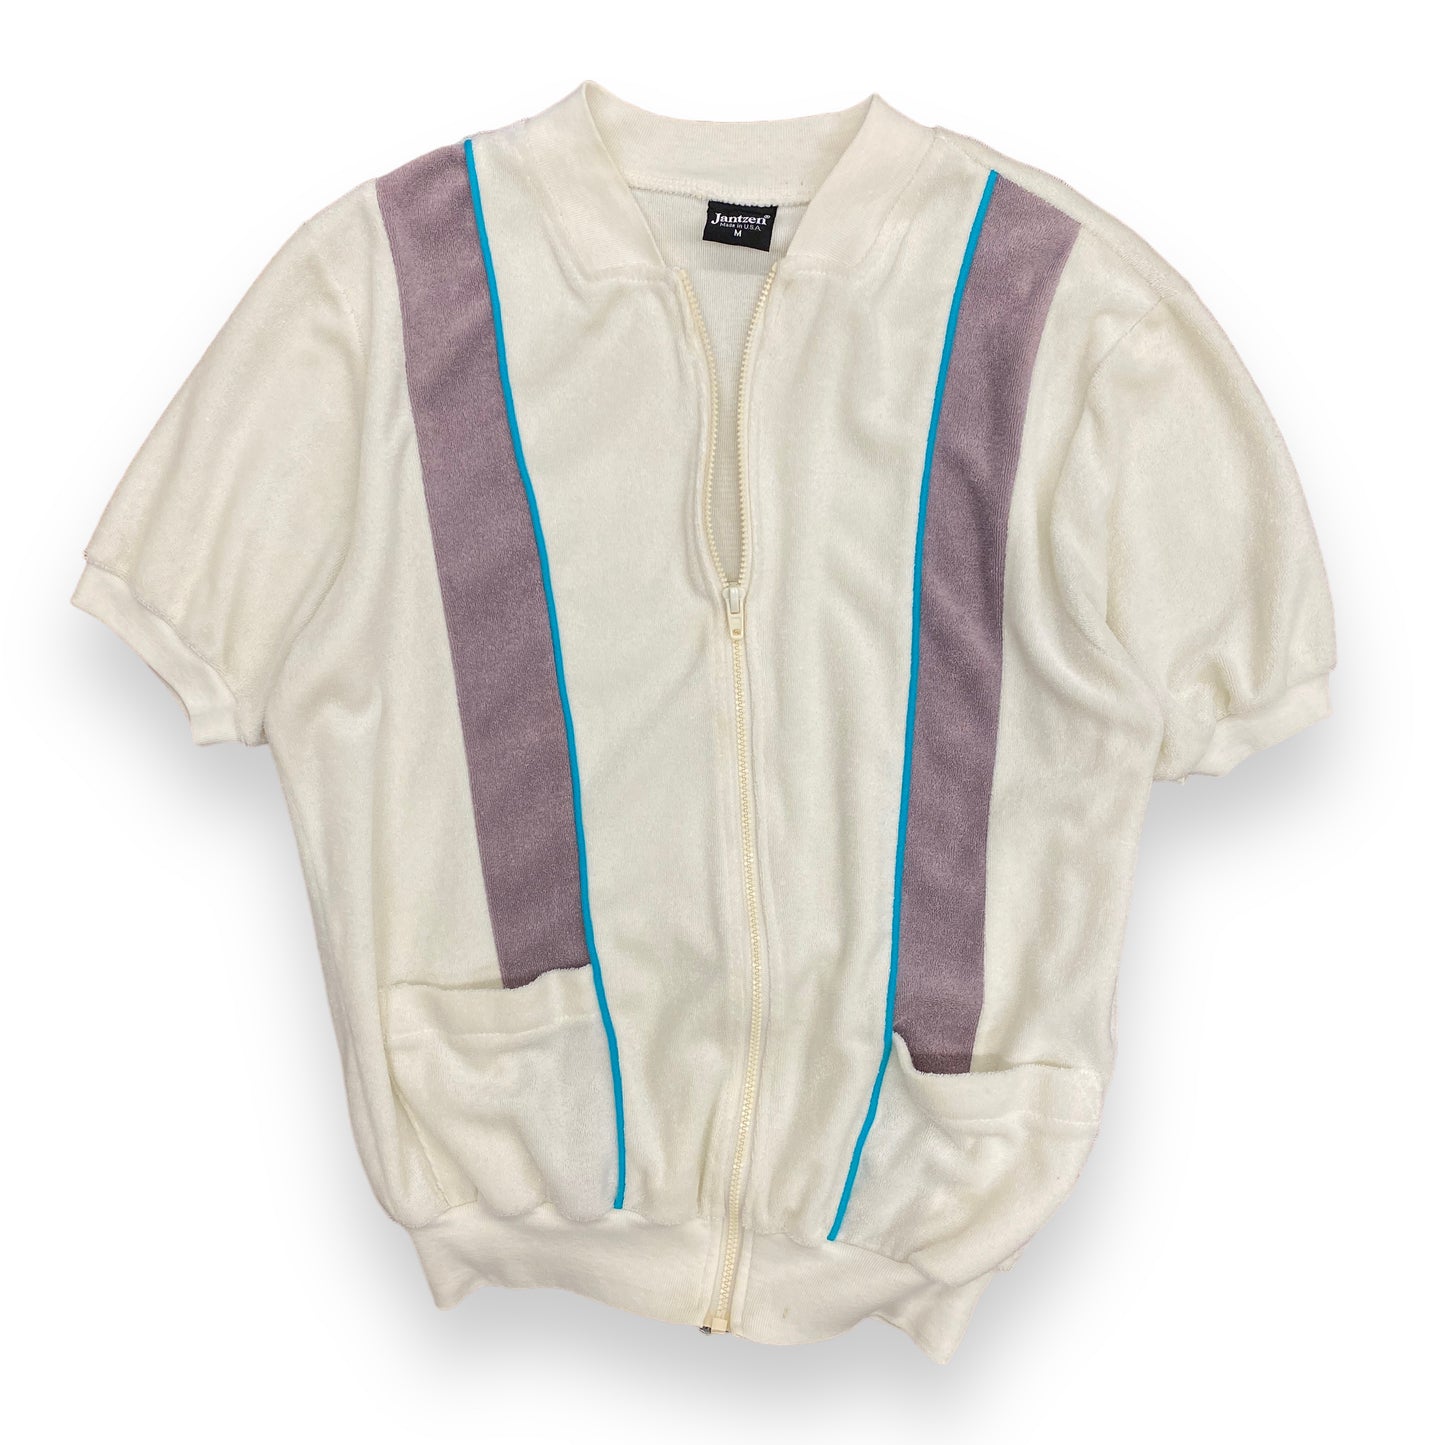 1980s Jantzen Terry Cloth Zip-Up Tee - Size Medium